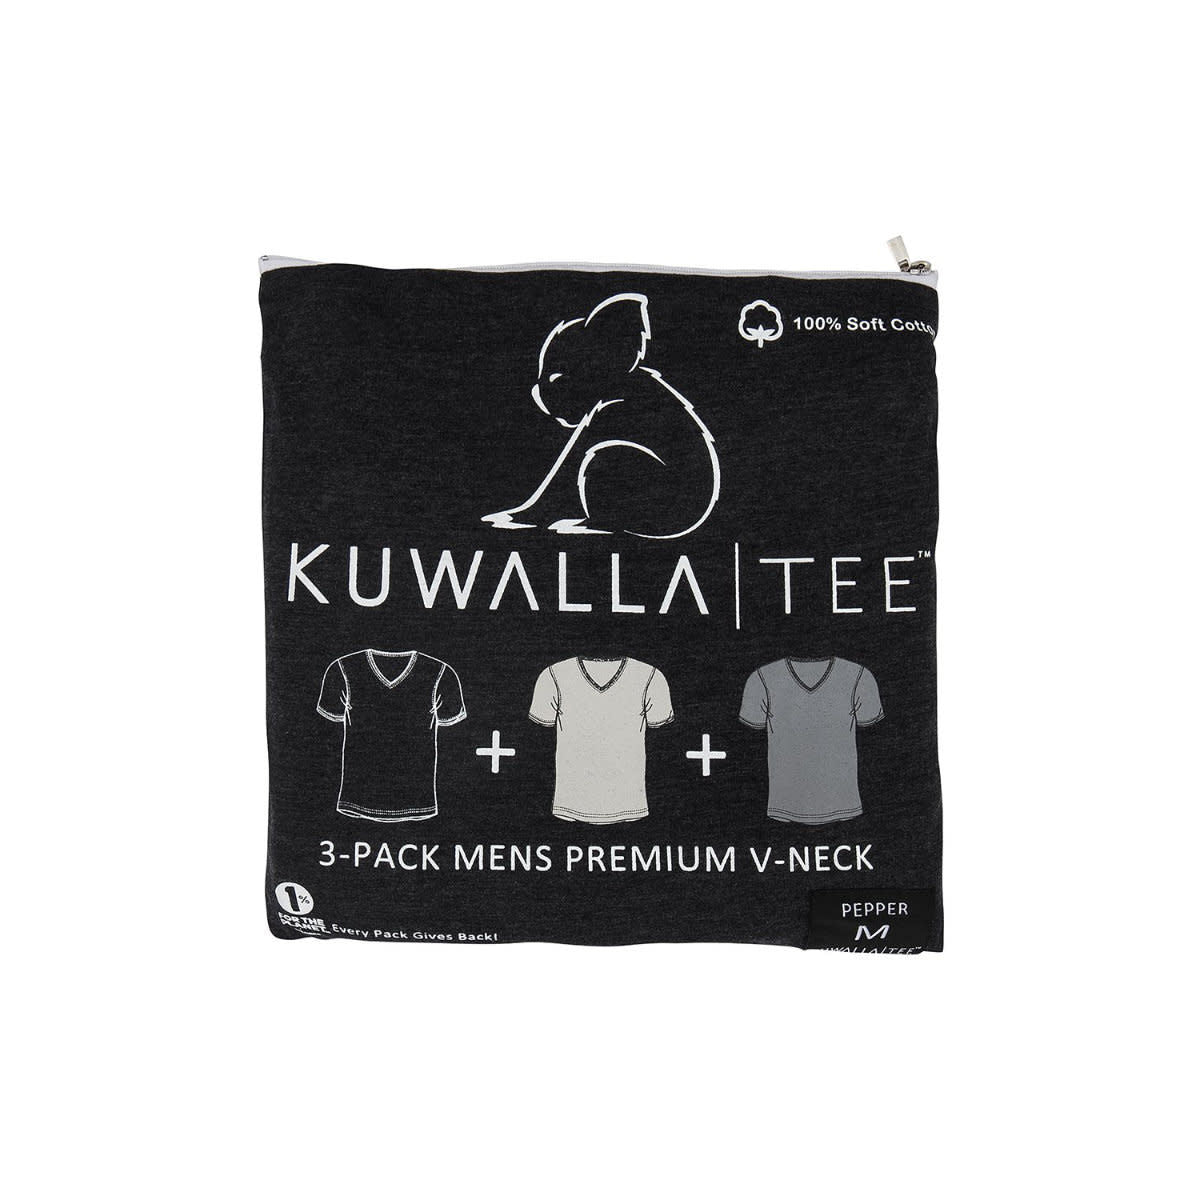 Kuwalla-Tee 3-Pack V-Neck Pepper